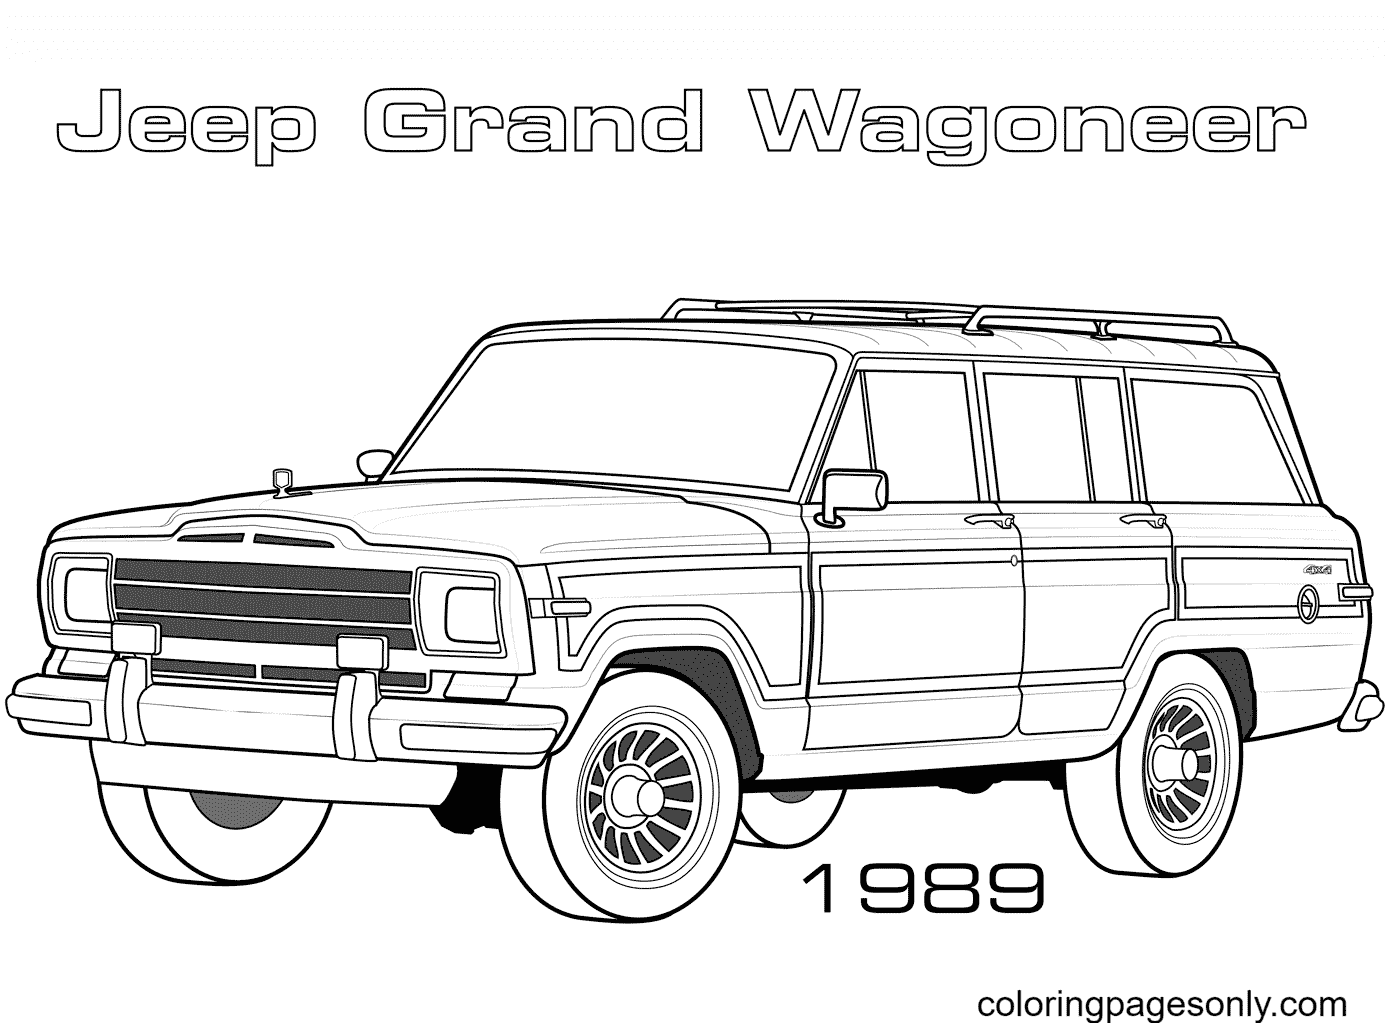 Джип Гранд Вагонер 1989 года выпуска от Jeep